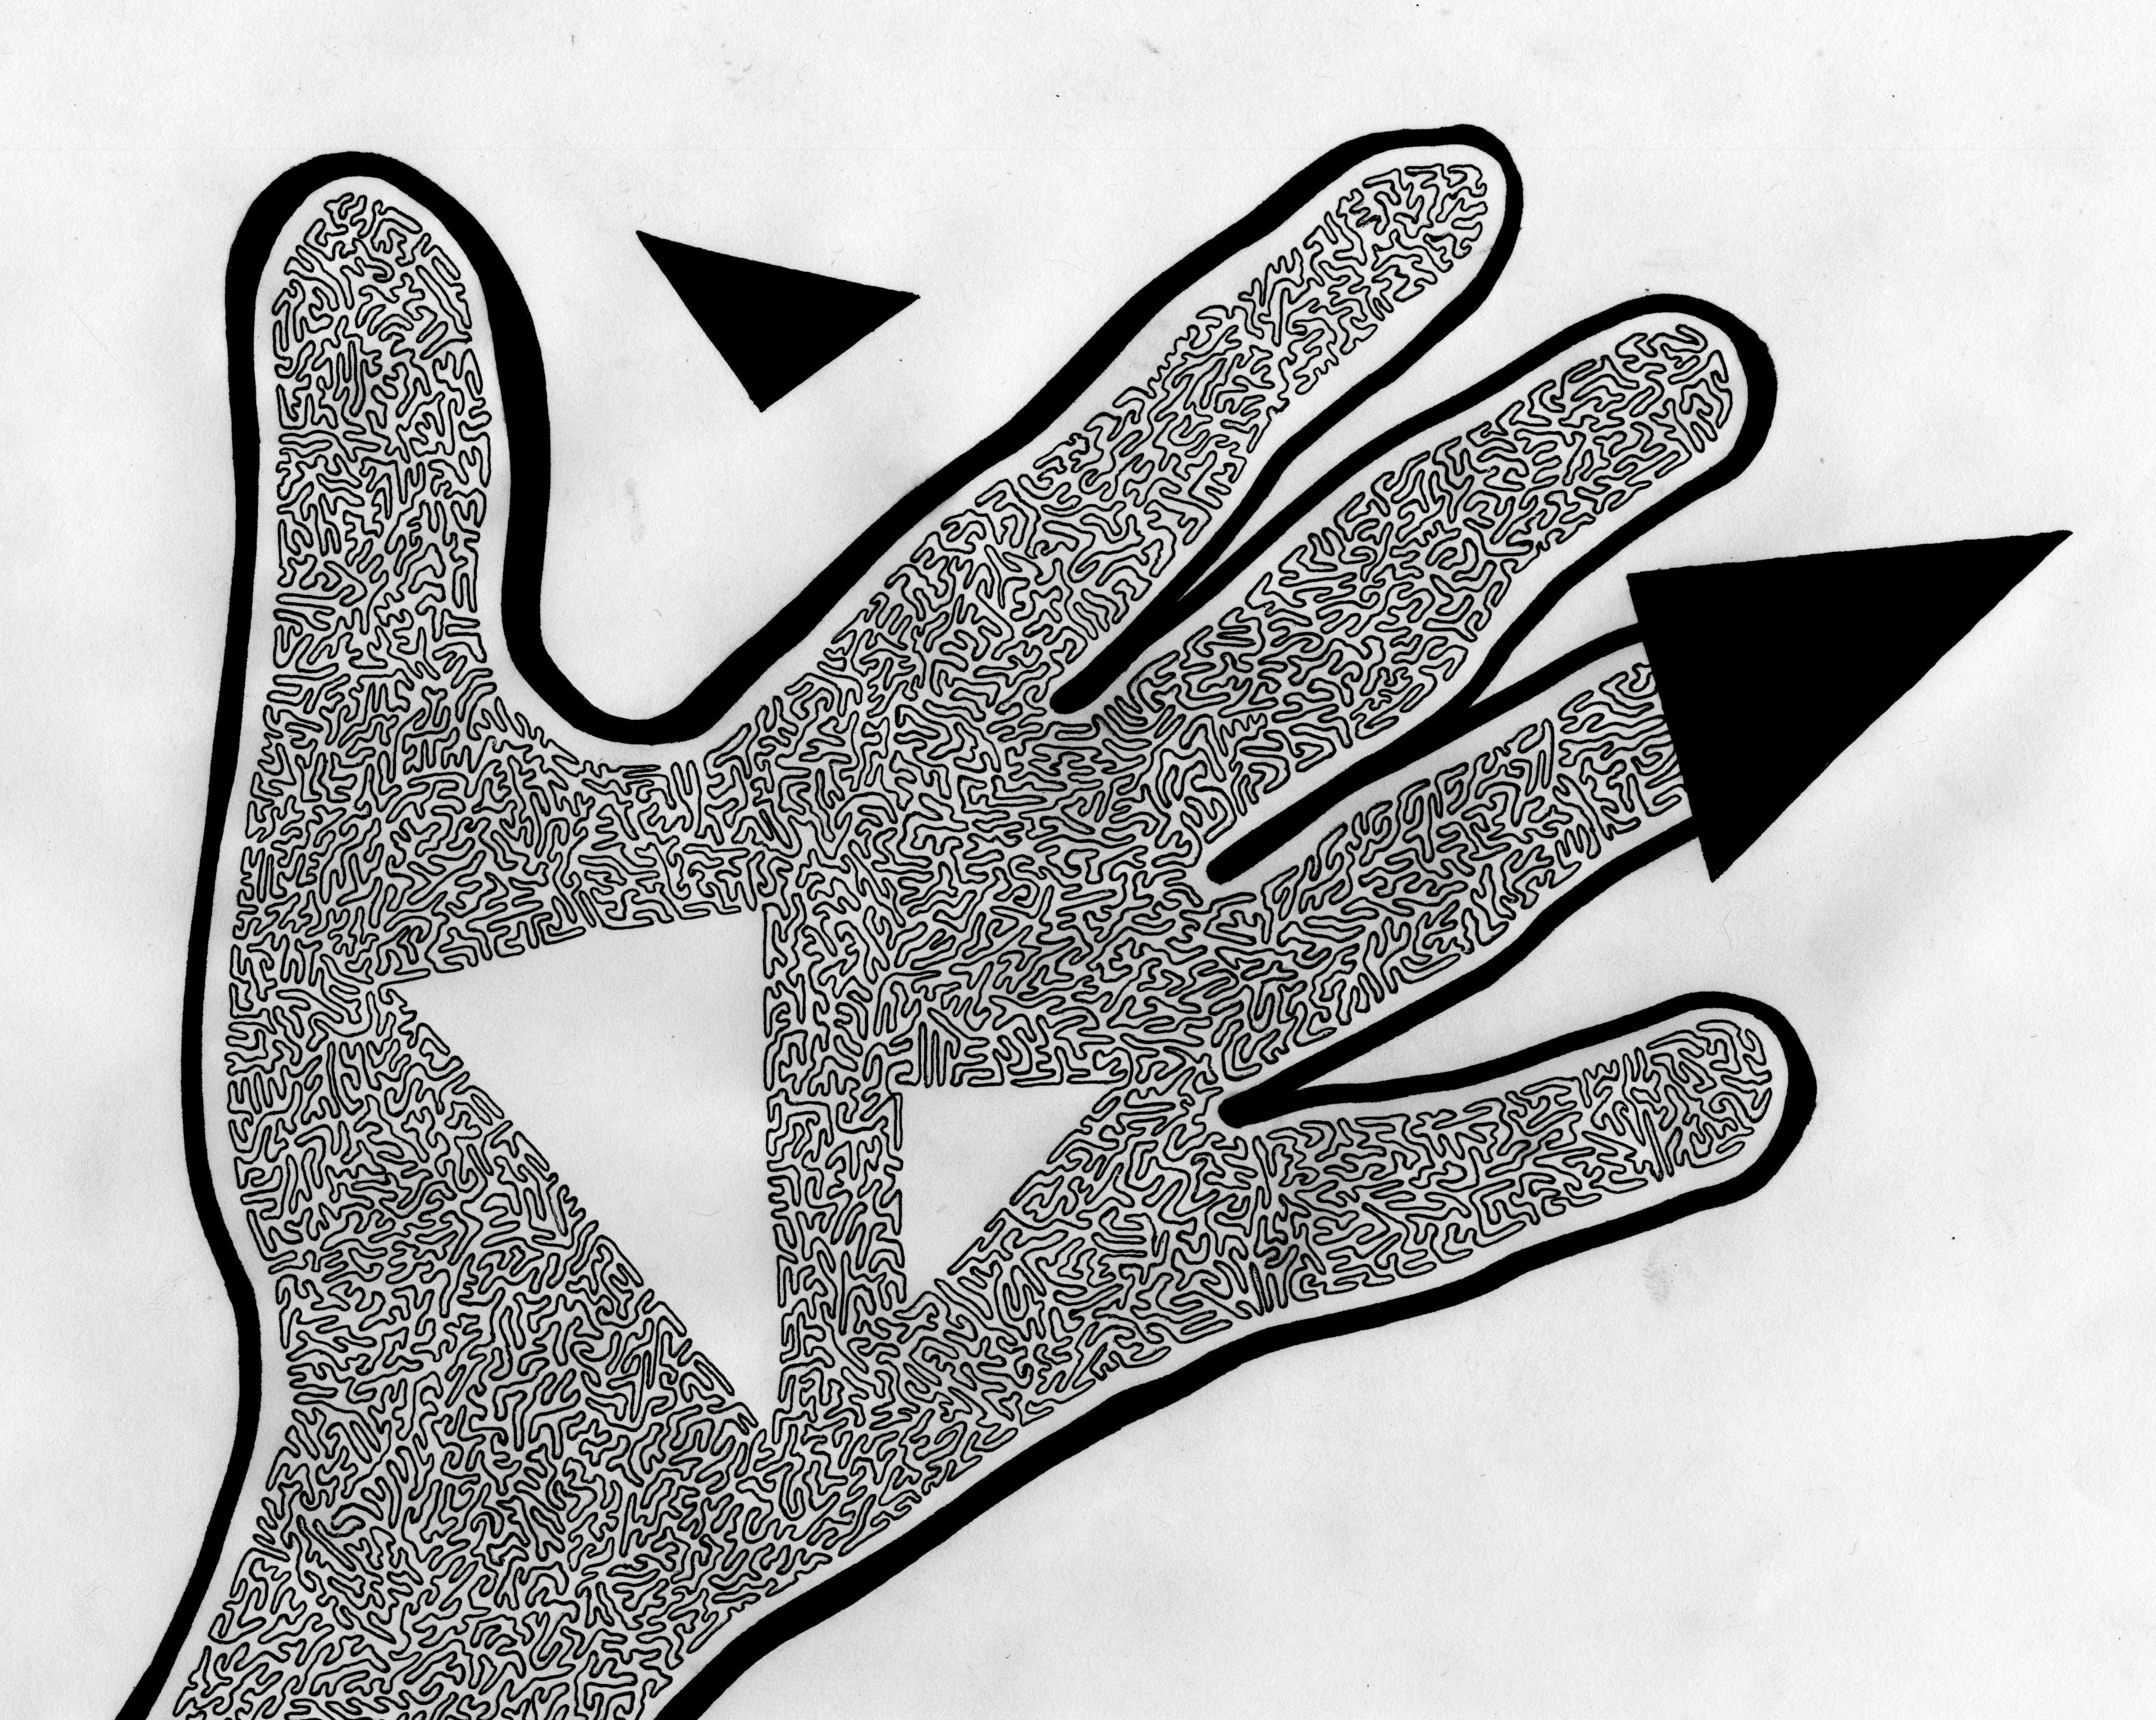 Embodied Hand (The 4.5-fold Path) by Daniel Friedman. Uploaded July 4, 2017. 